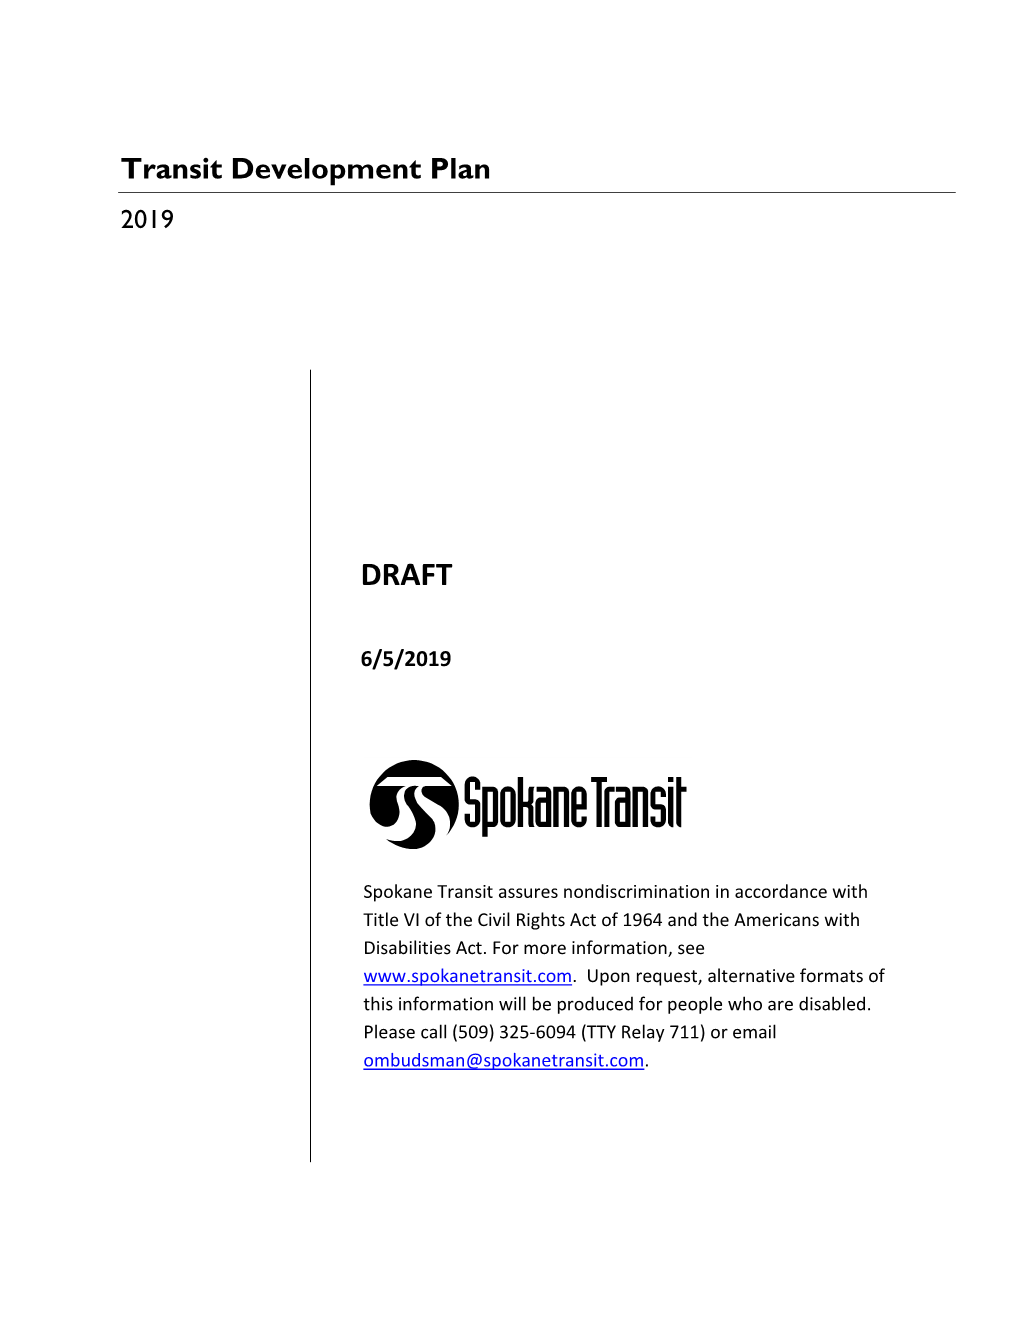 Transit Development Plan 2019